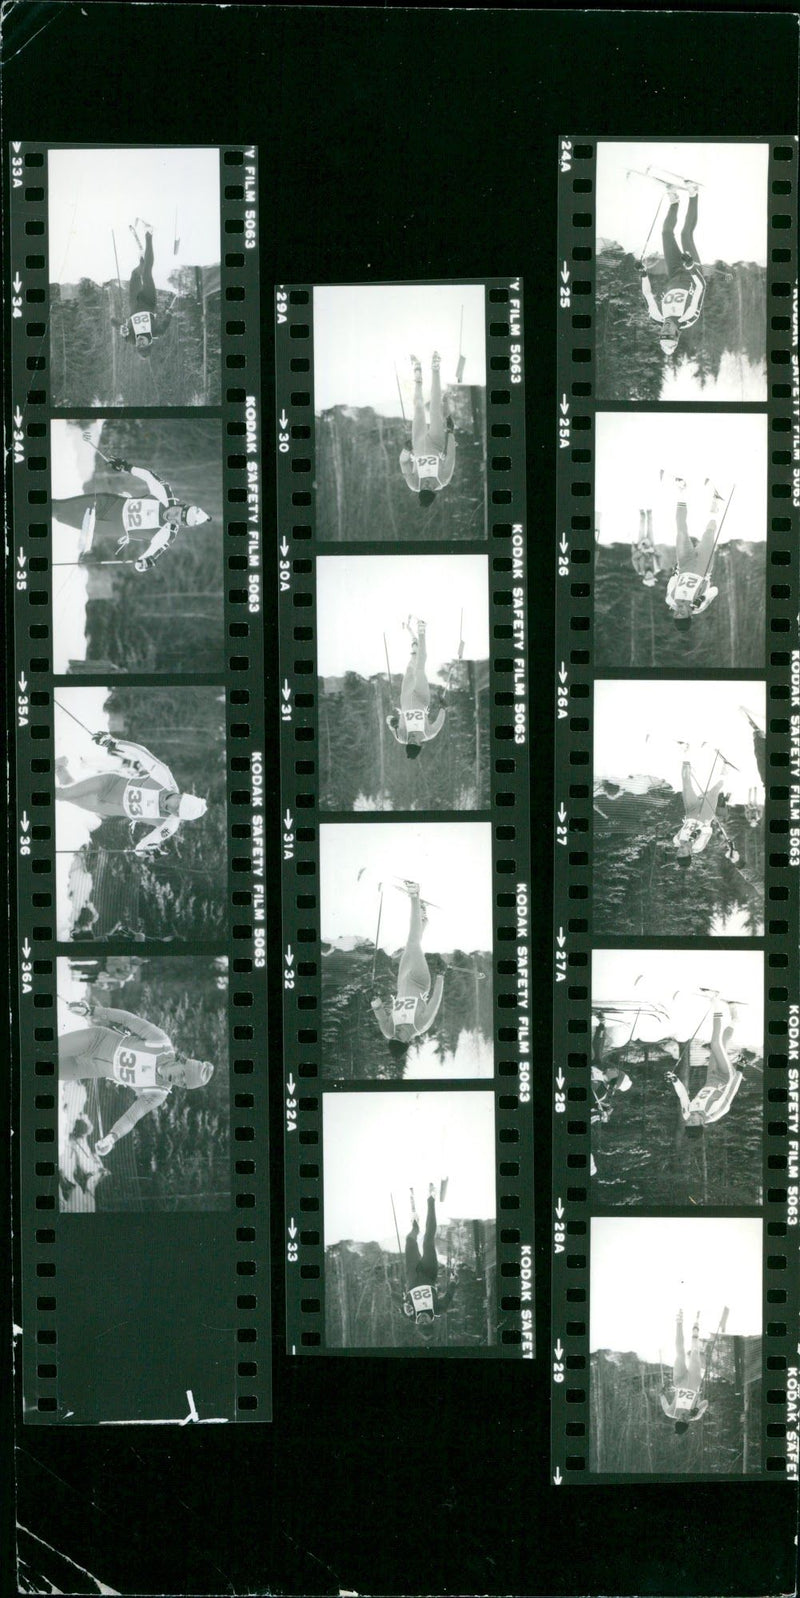 1980 LANGLAUF WINTEROLYMPIA MOST FAMOUS FILMS FILM - Vintage Photograph